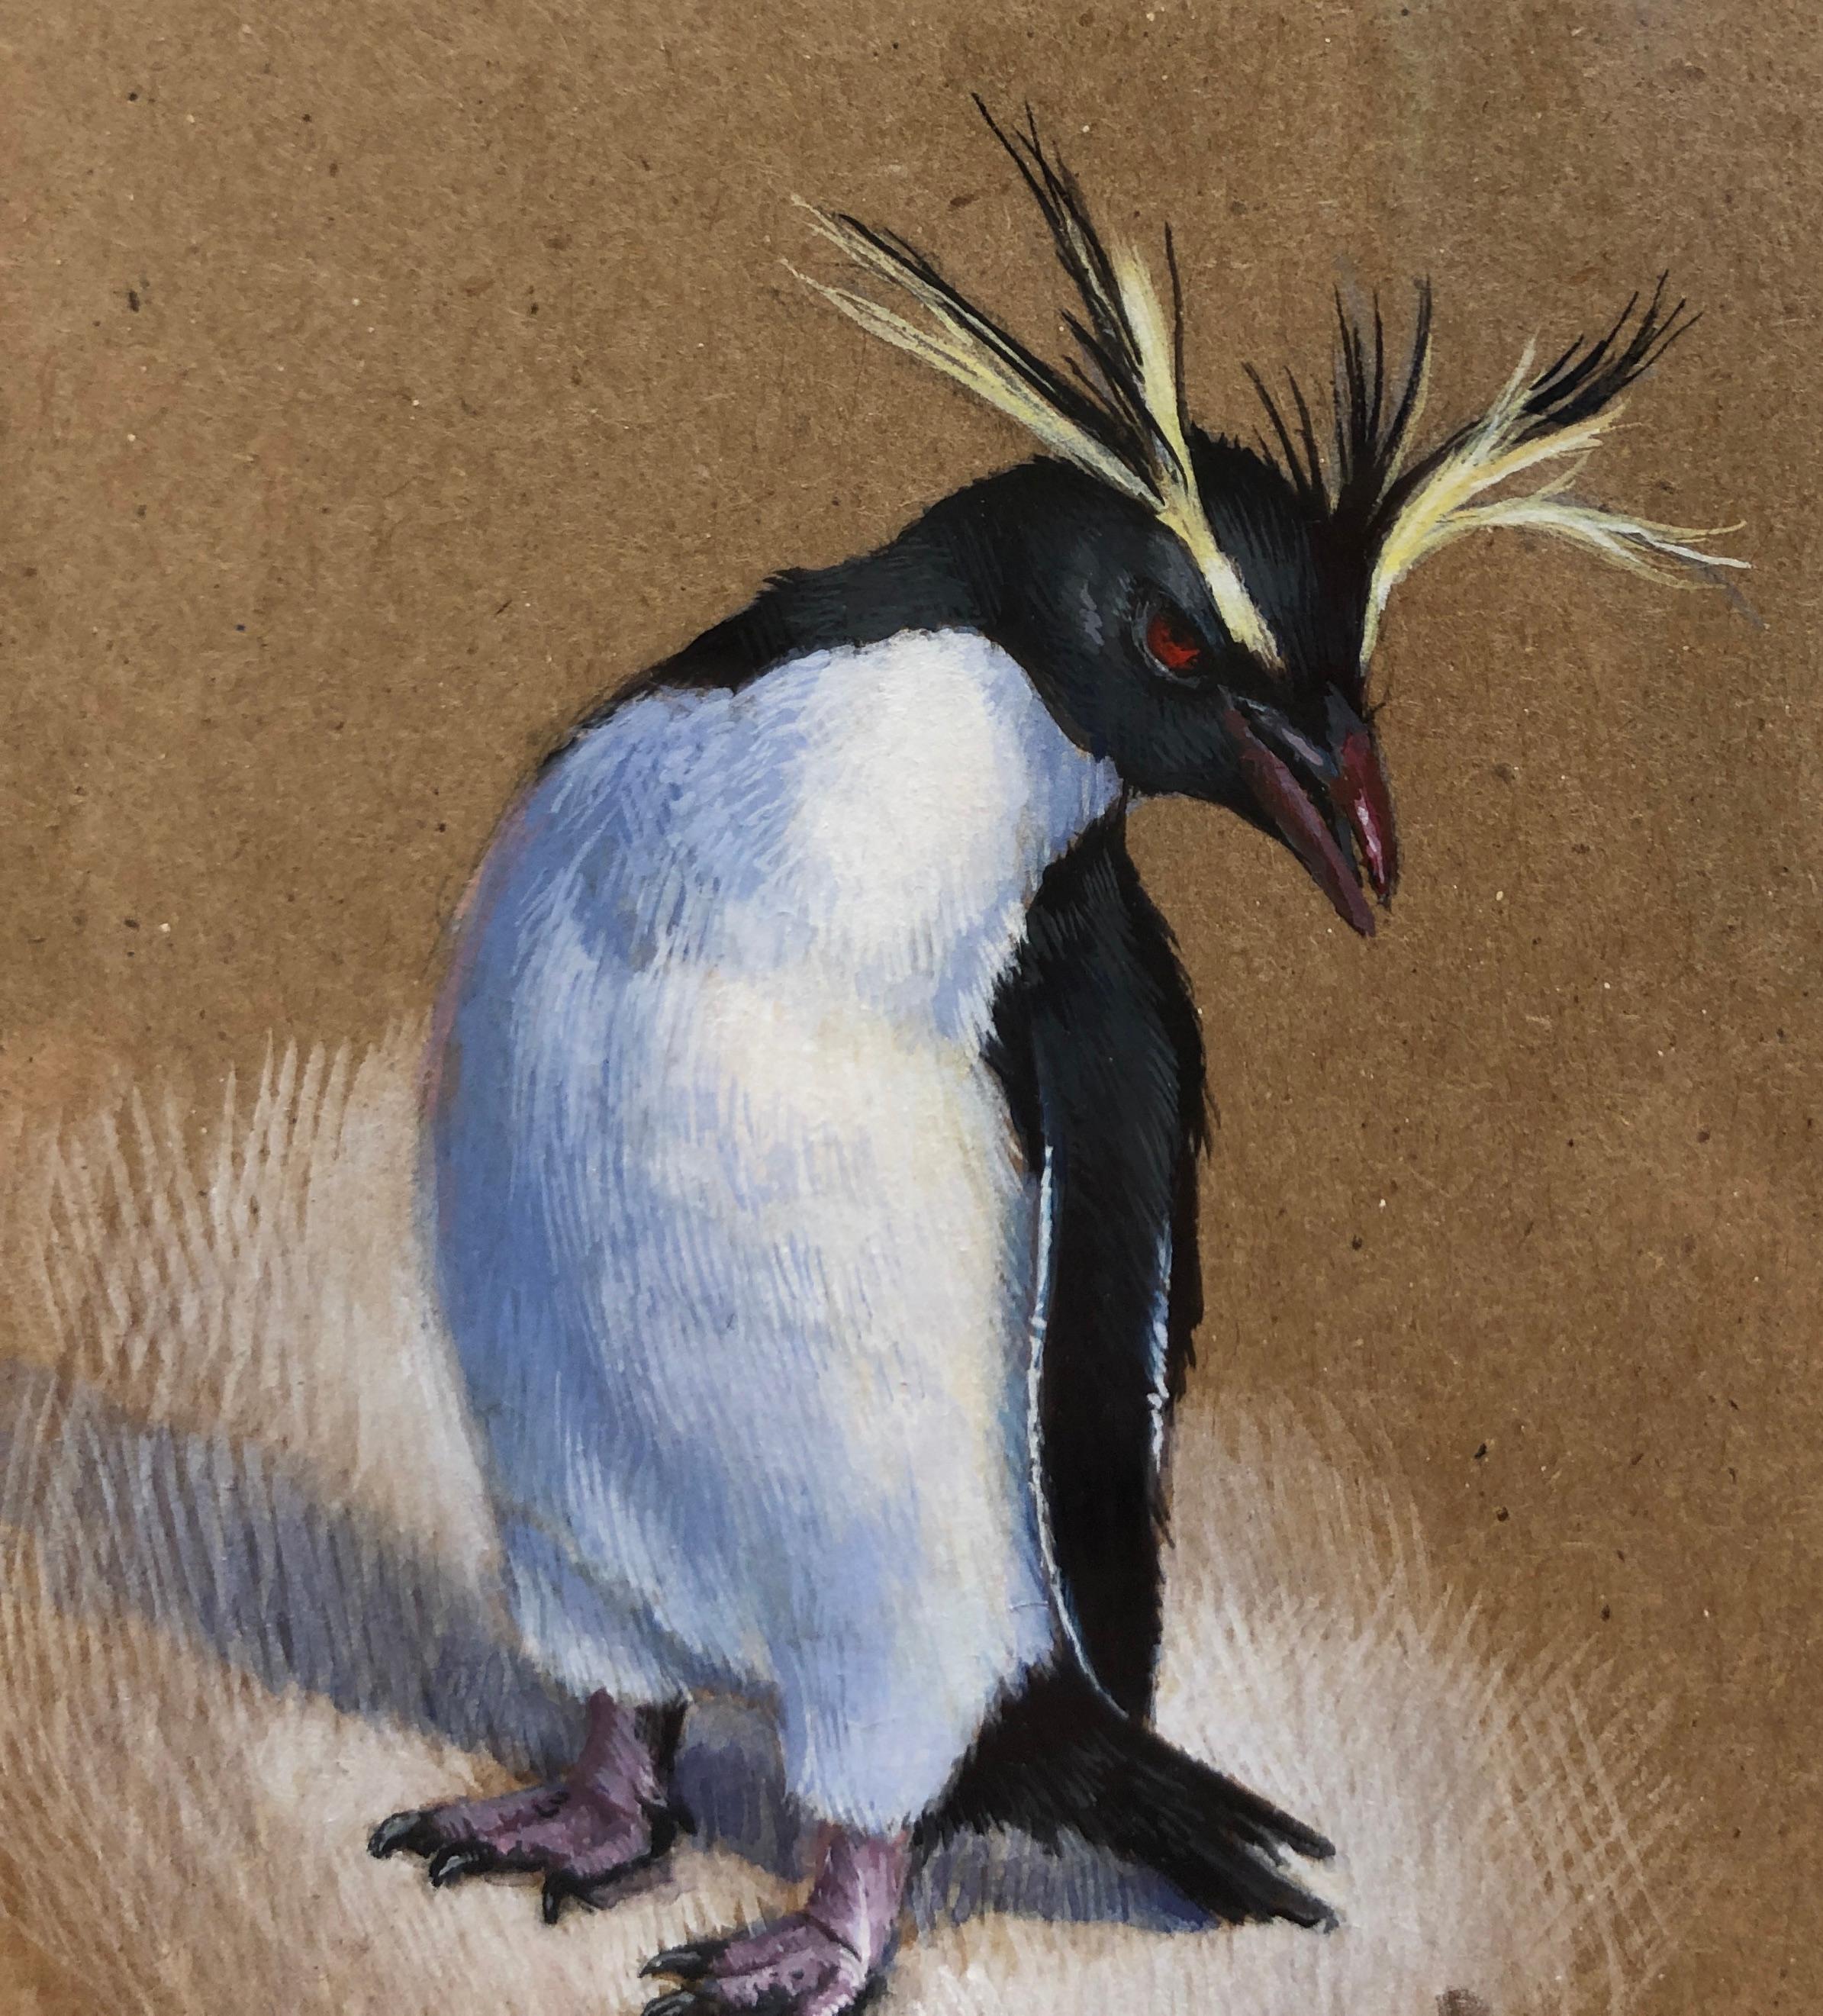 Dina Brodsky, Rockhopper Penguin, realist animal watercolor on paper, 2019 1